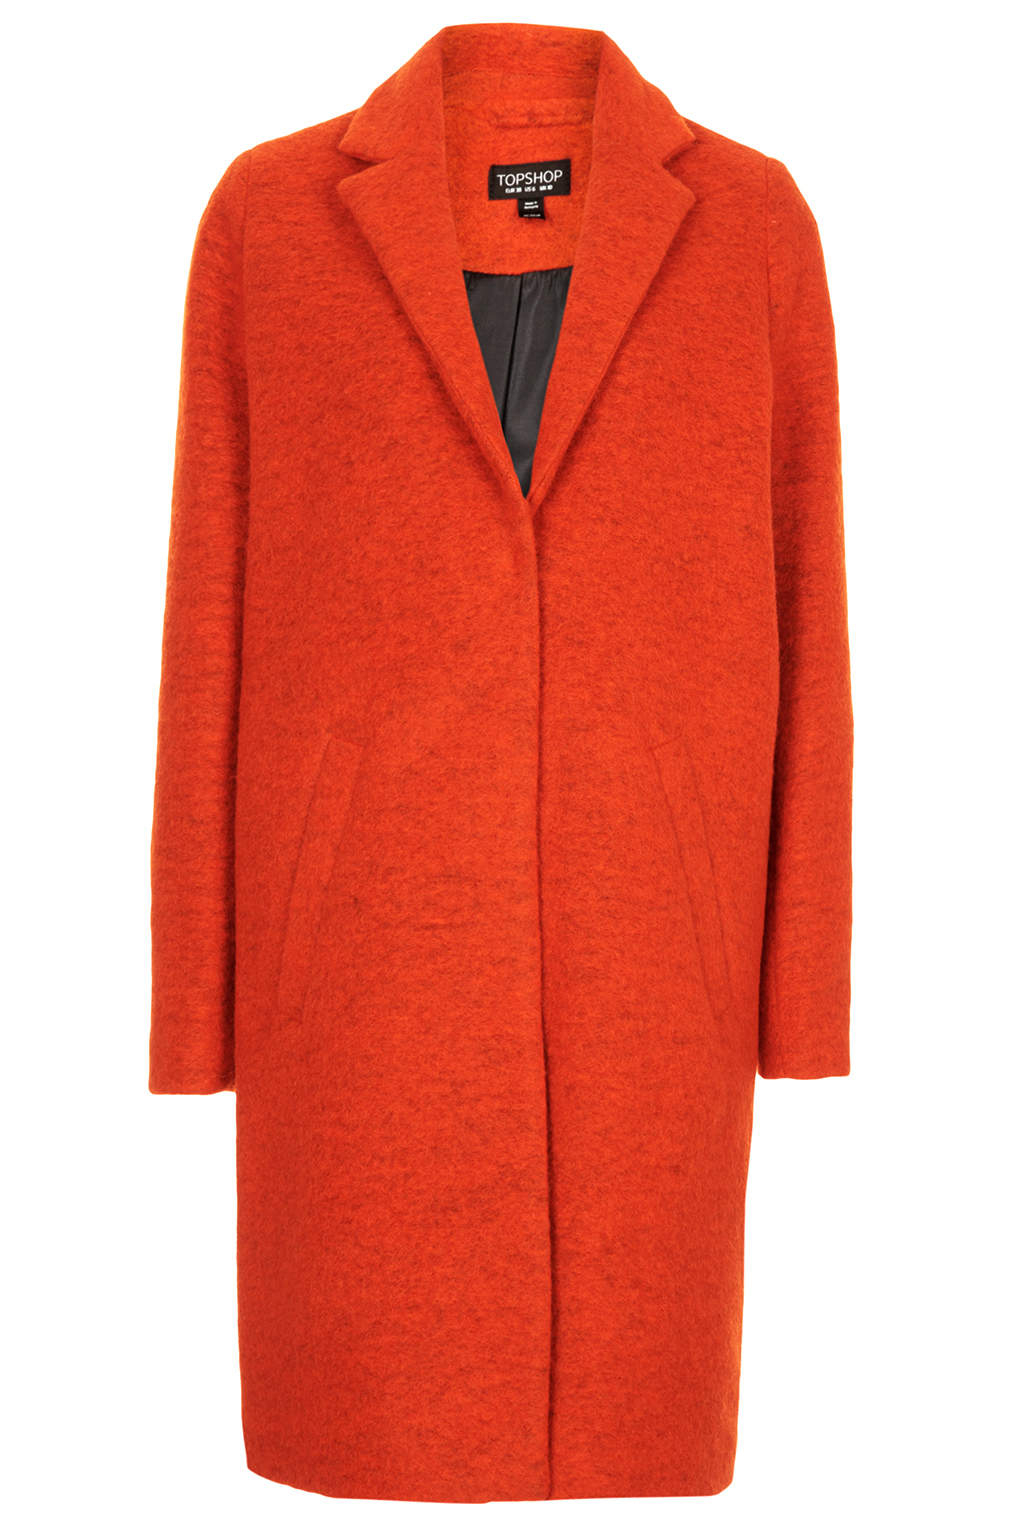 TOPSHOP Wool Boyfriend Coat in Orange - Lyst